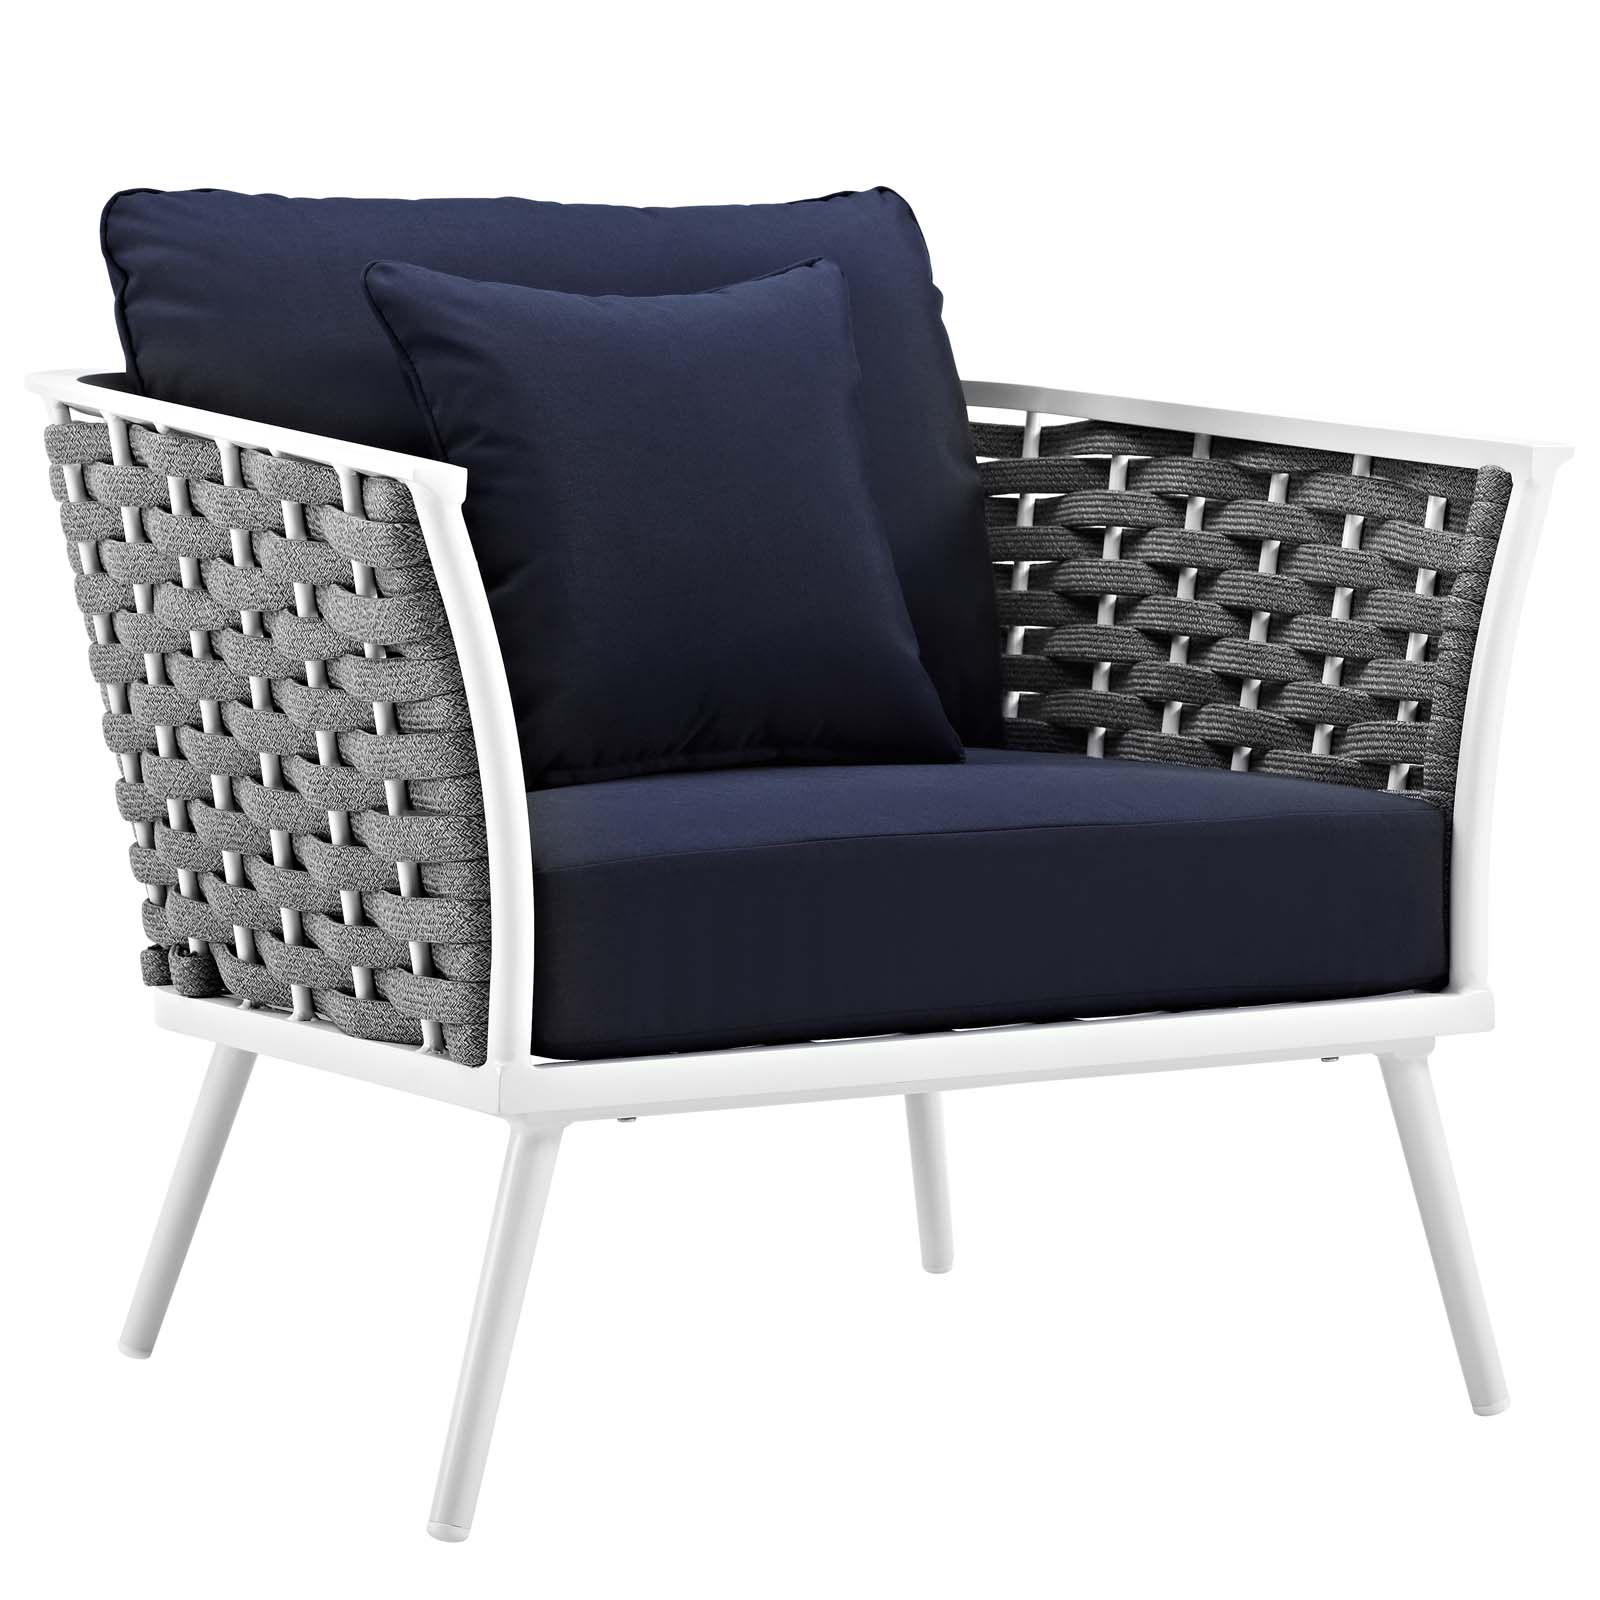 Modern Contemporary Urban Design Outdoor Patio Balcony Garden Furniture Lounge Chair Armchair, Set of Two, Fabric Aluminium, White Navy - image 5 of 6